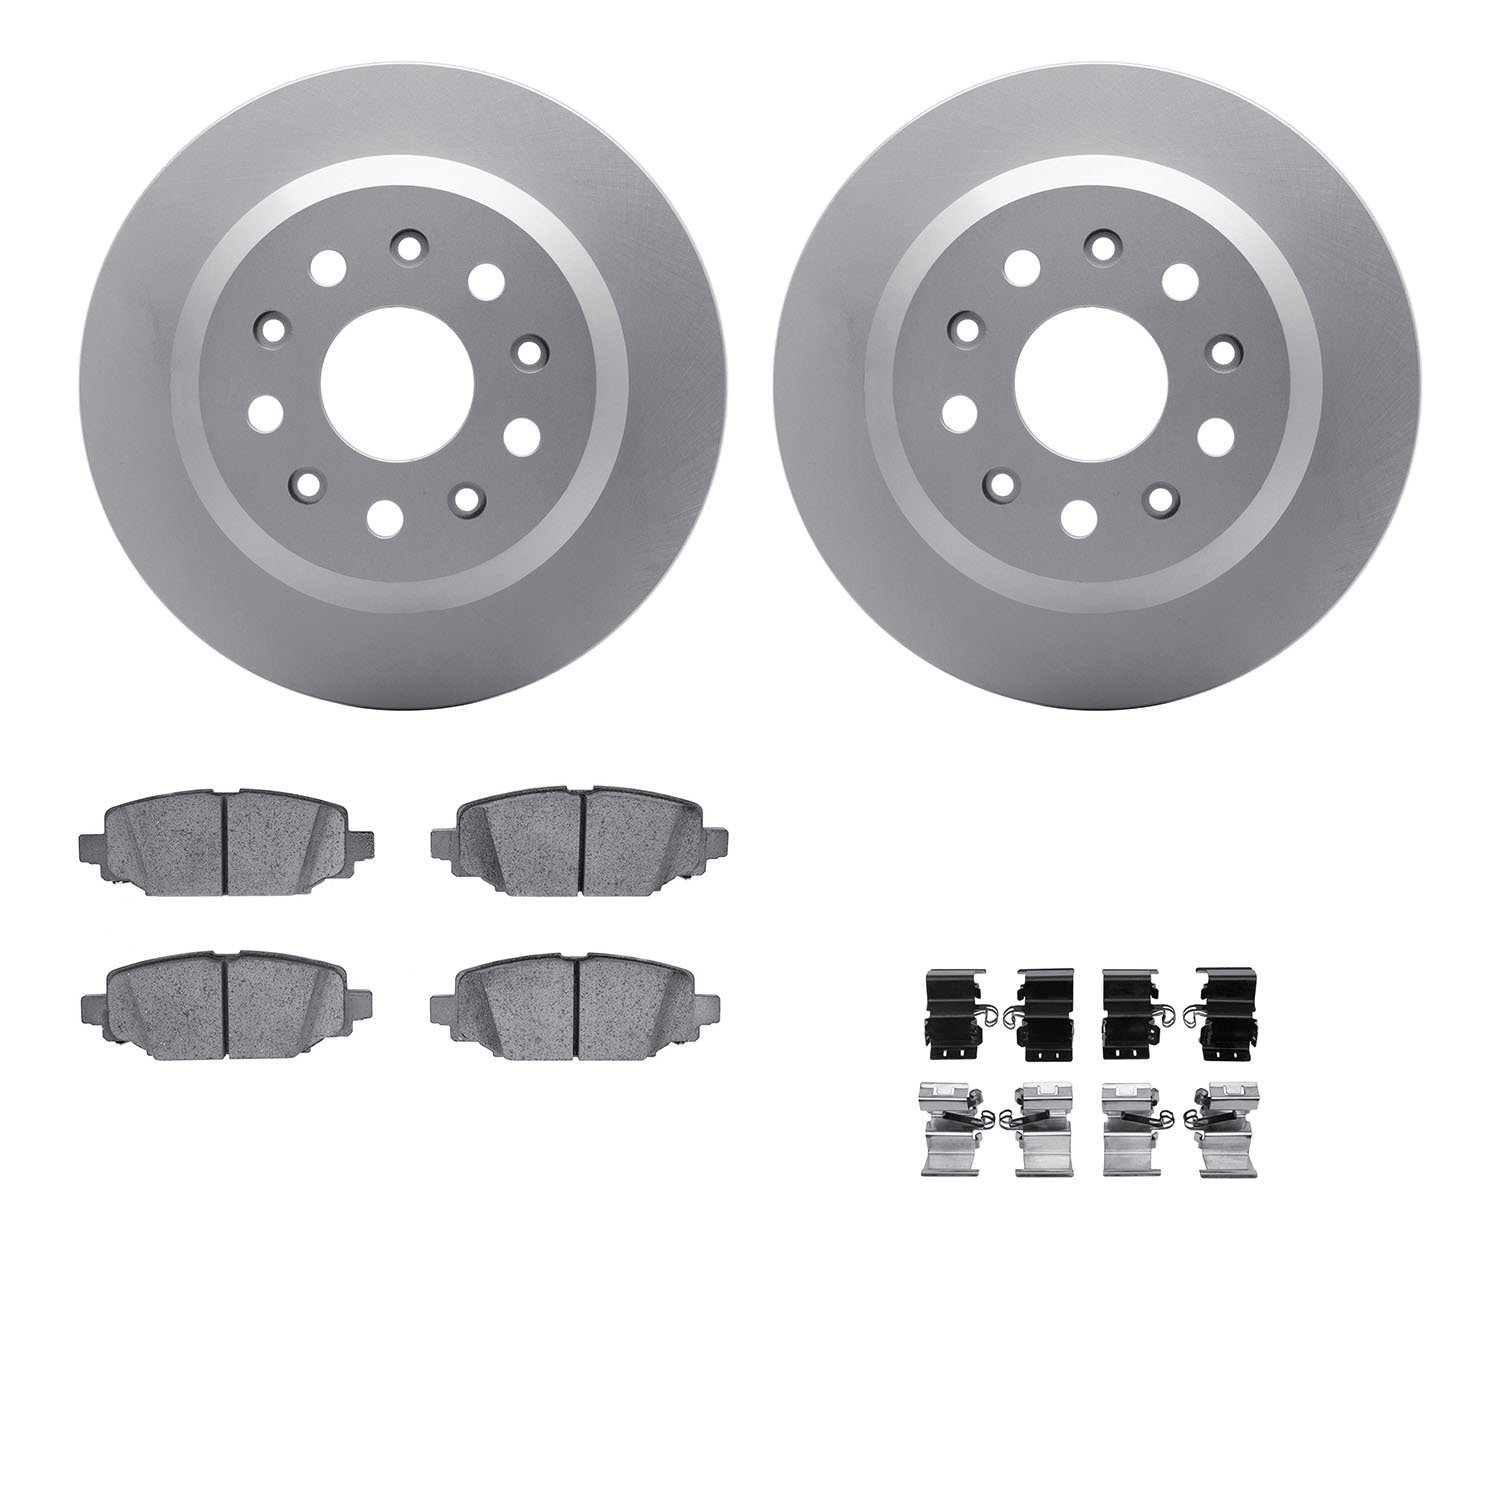 4412-42033 Geospec Brake Rotors with Ultimate-Duty Brake Pads & Hardware, Fits Select Mopar, Position: Rear